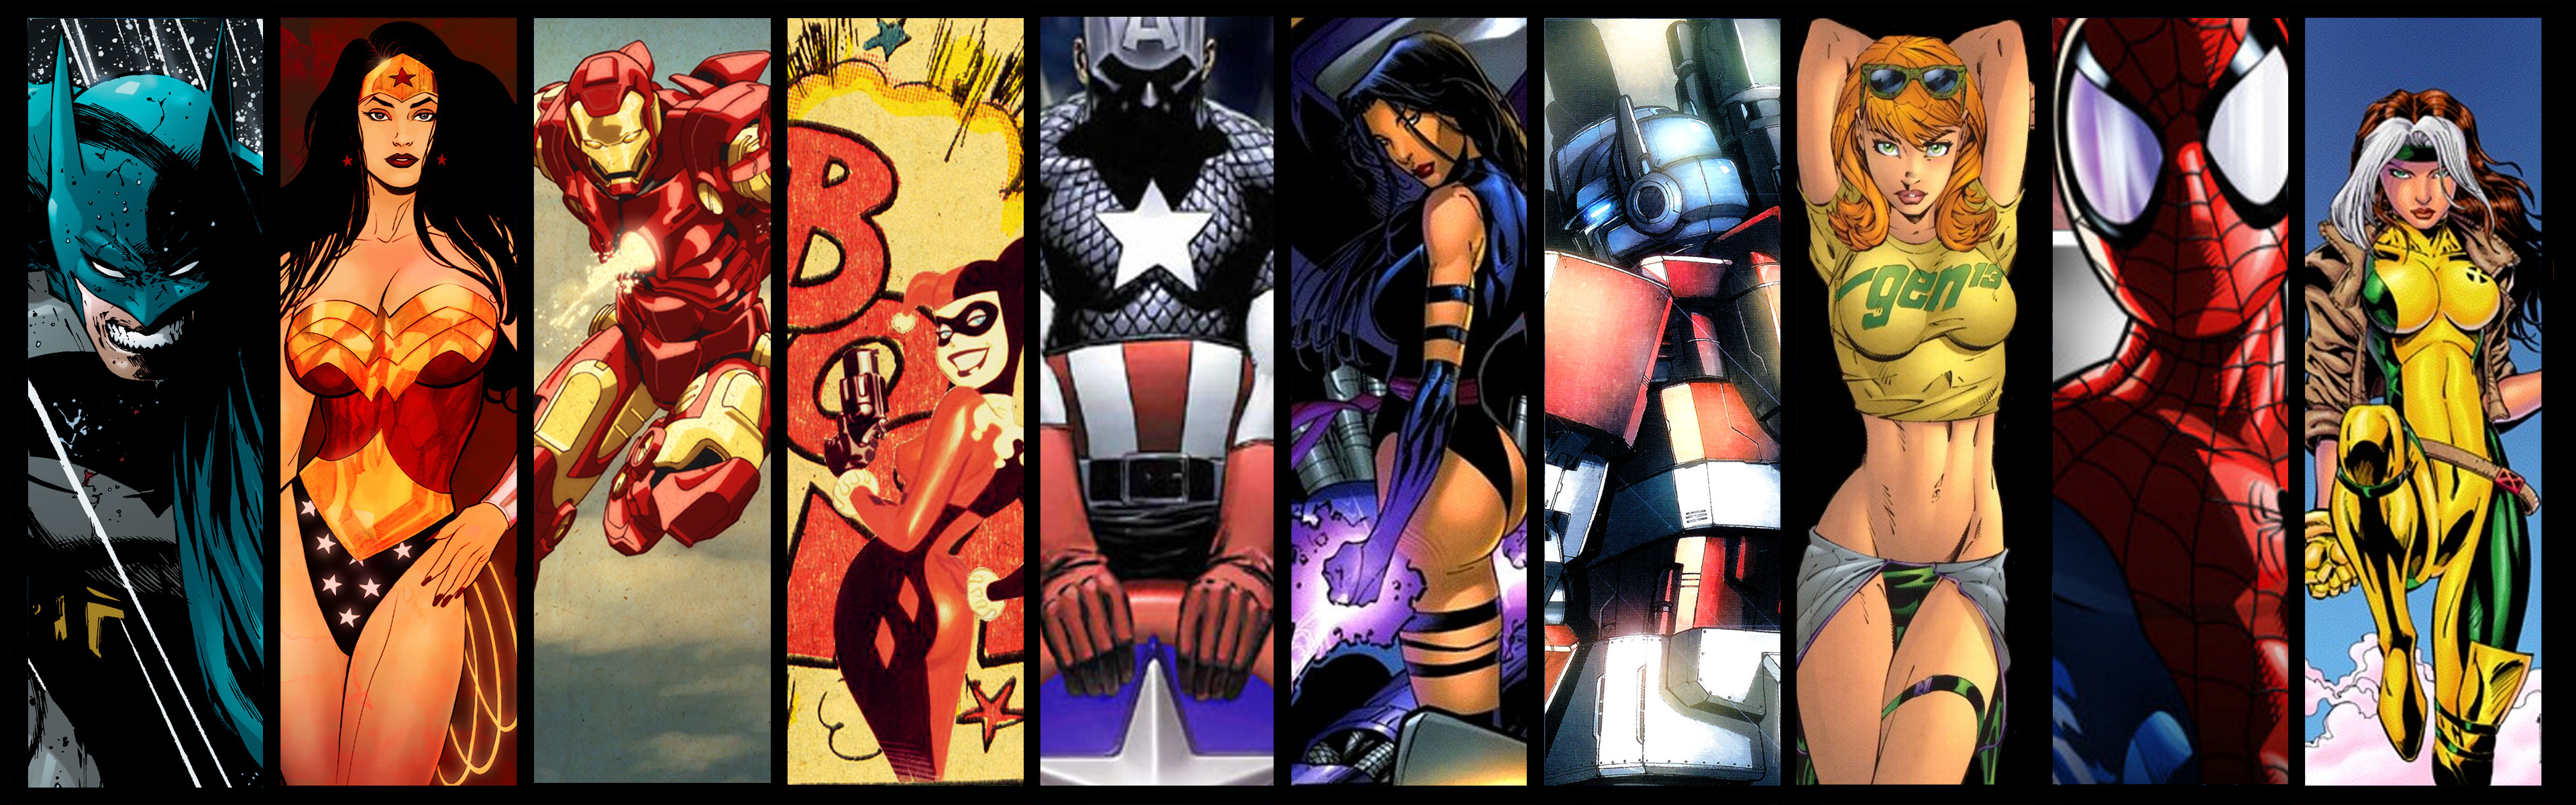 Batman, Optimus Prime, Iron Man, DC Comics, Spider-Man, Captain America, Harley Quinn, Psylocke, Rogue, Marvel Comics, Gen13, Caitlin Fairchild, Wonder Woman - desktop wallpaper